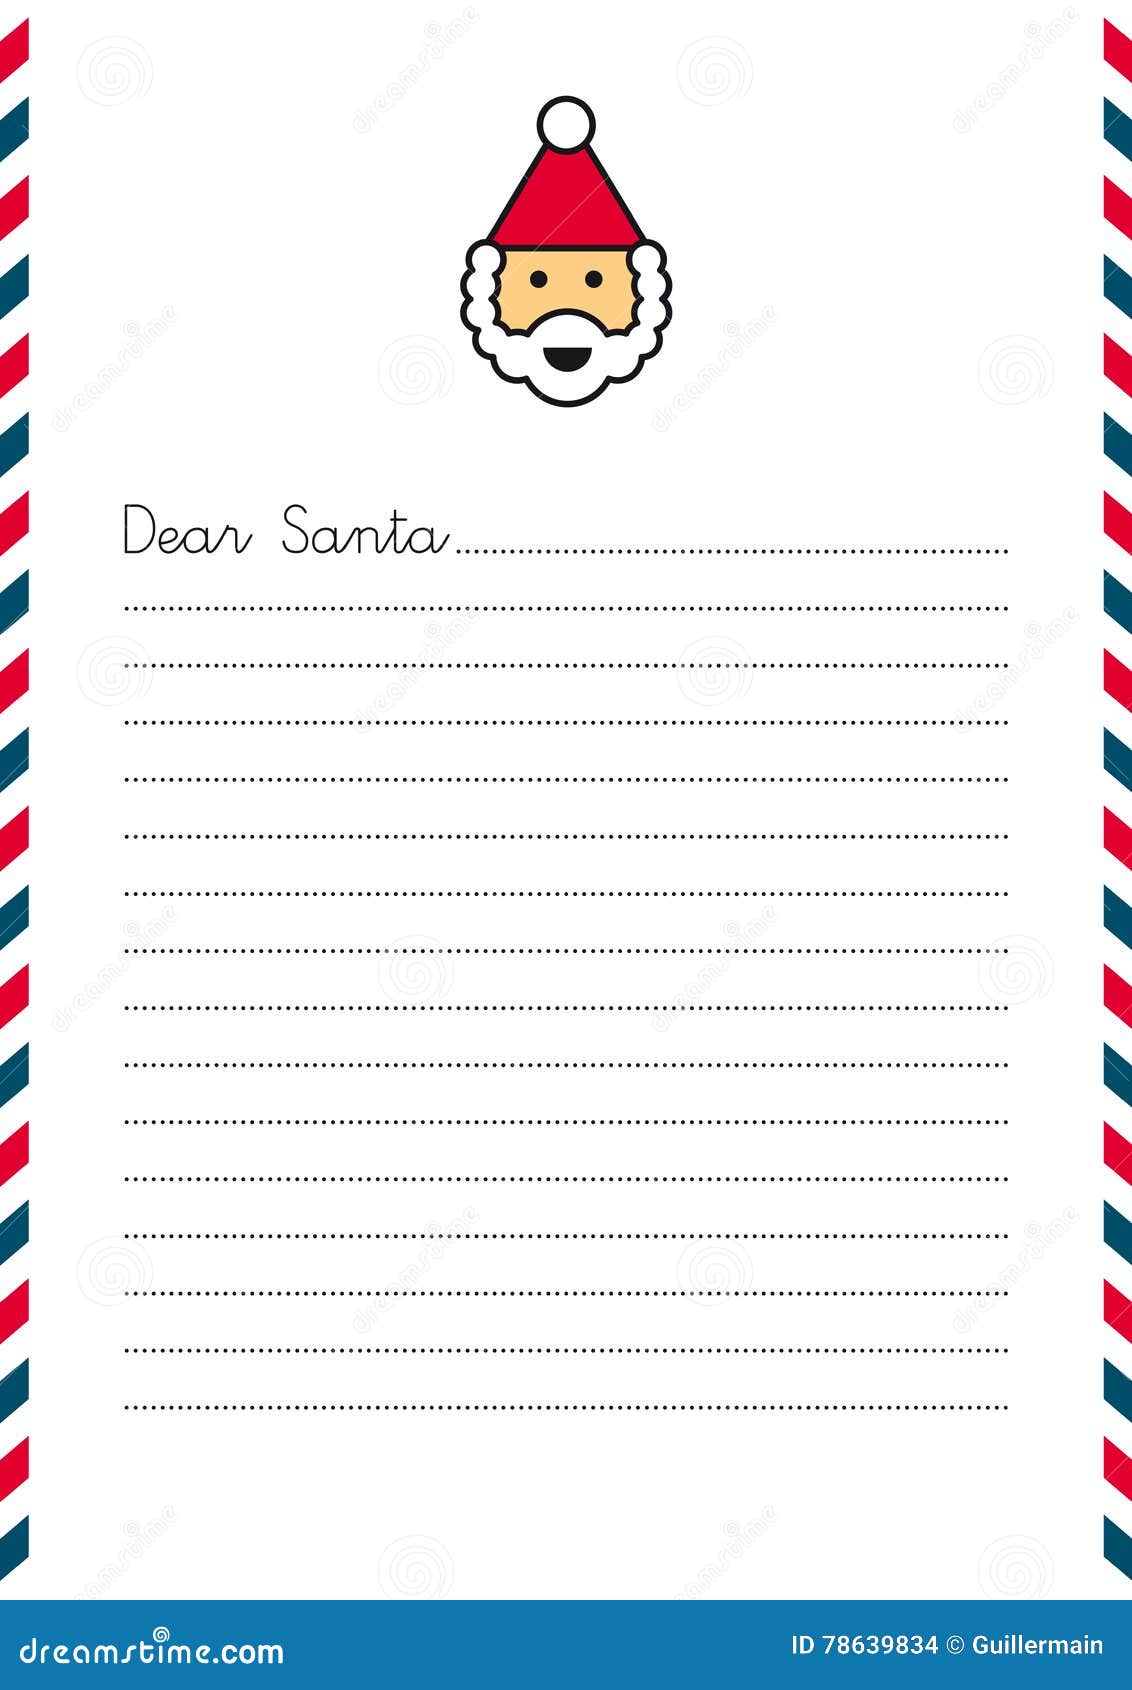 Dear Santa Letter on Letterhead Stock Vector - Illustration of With Santa Letterhead Template